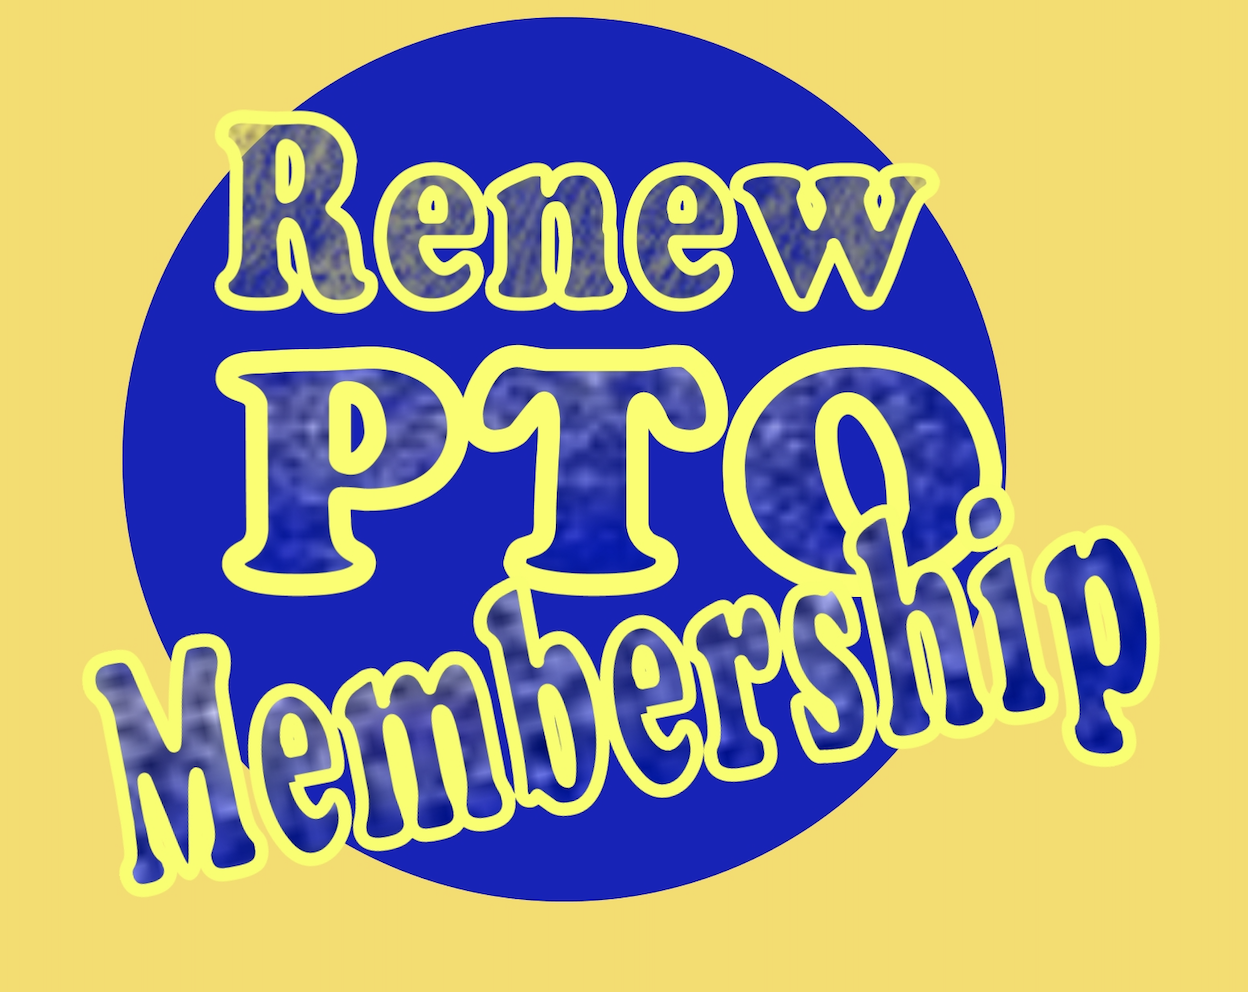 Renew Membership